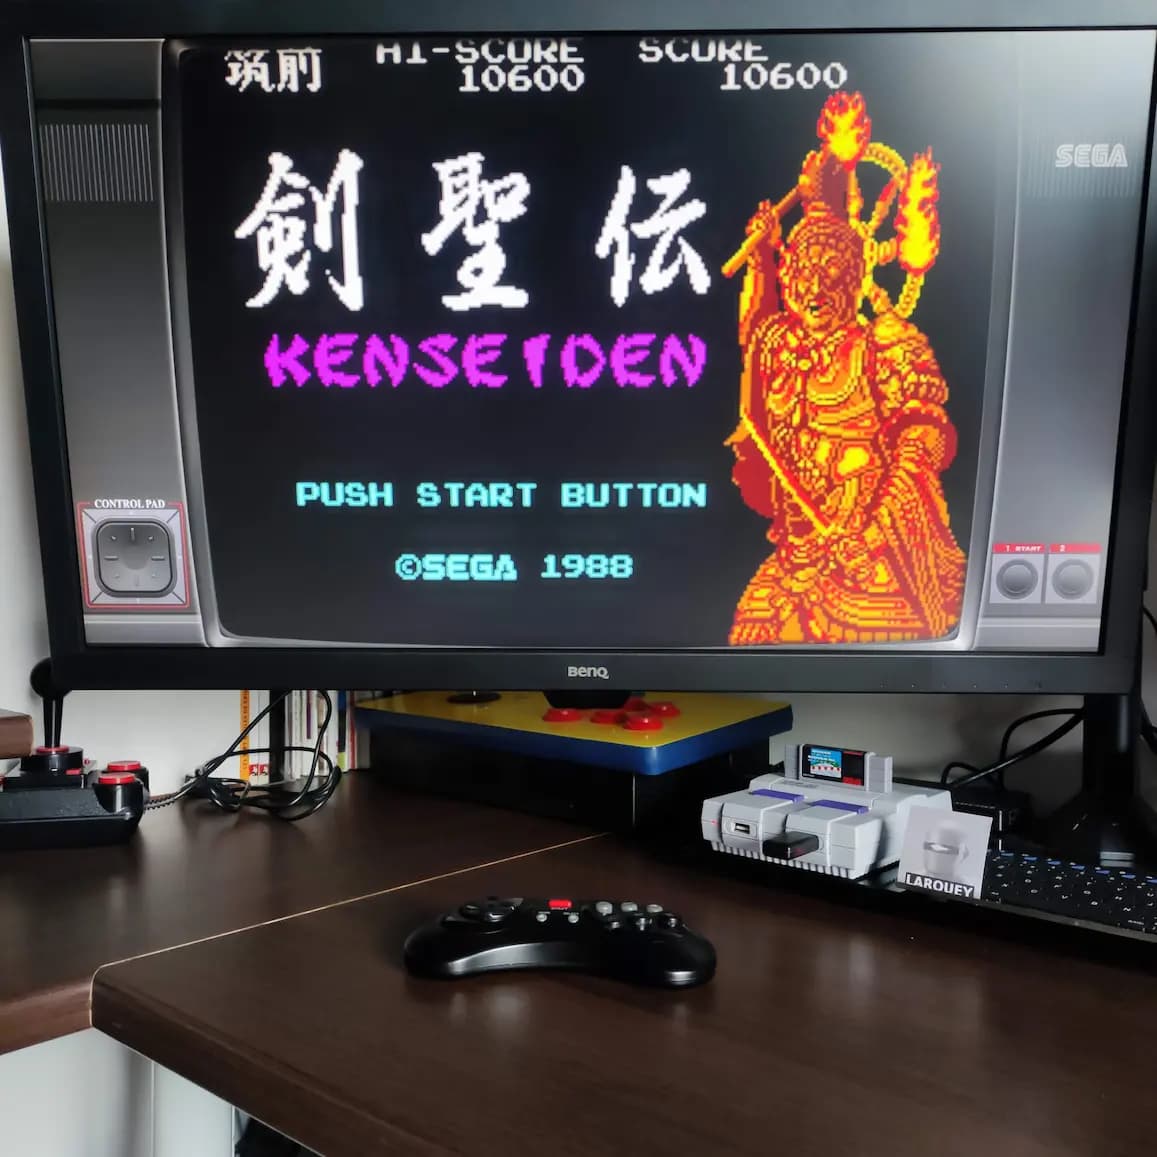 Larquey: Kenseiden (Sega Master System Emulated) 10,600 points on 2022-07-31 10:29:23